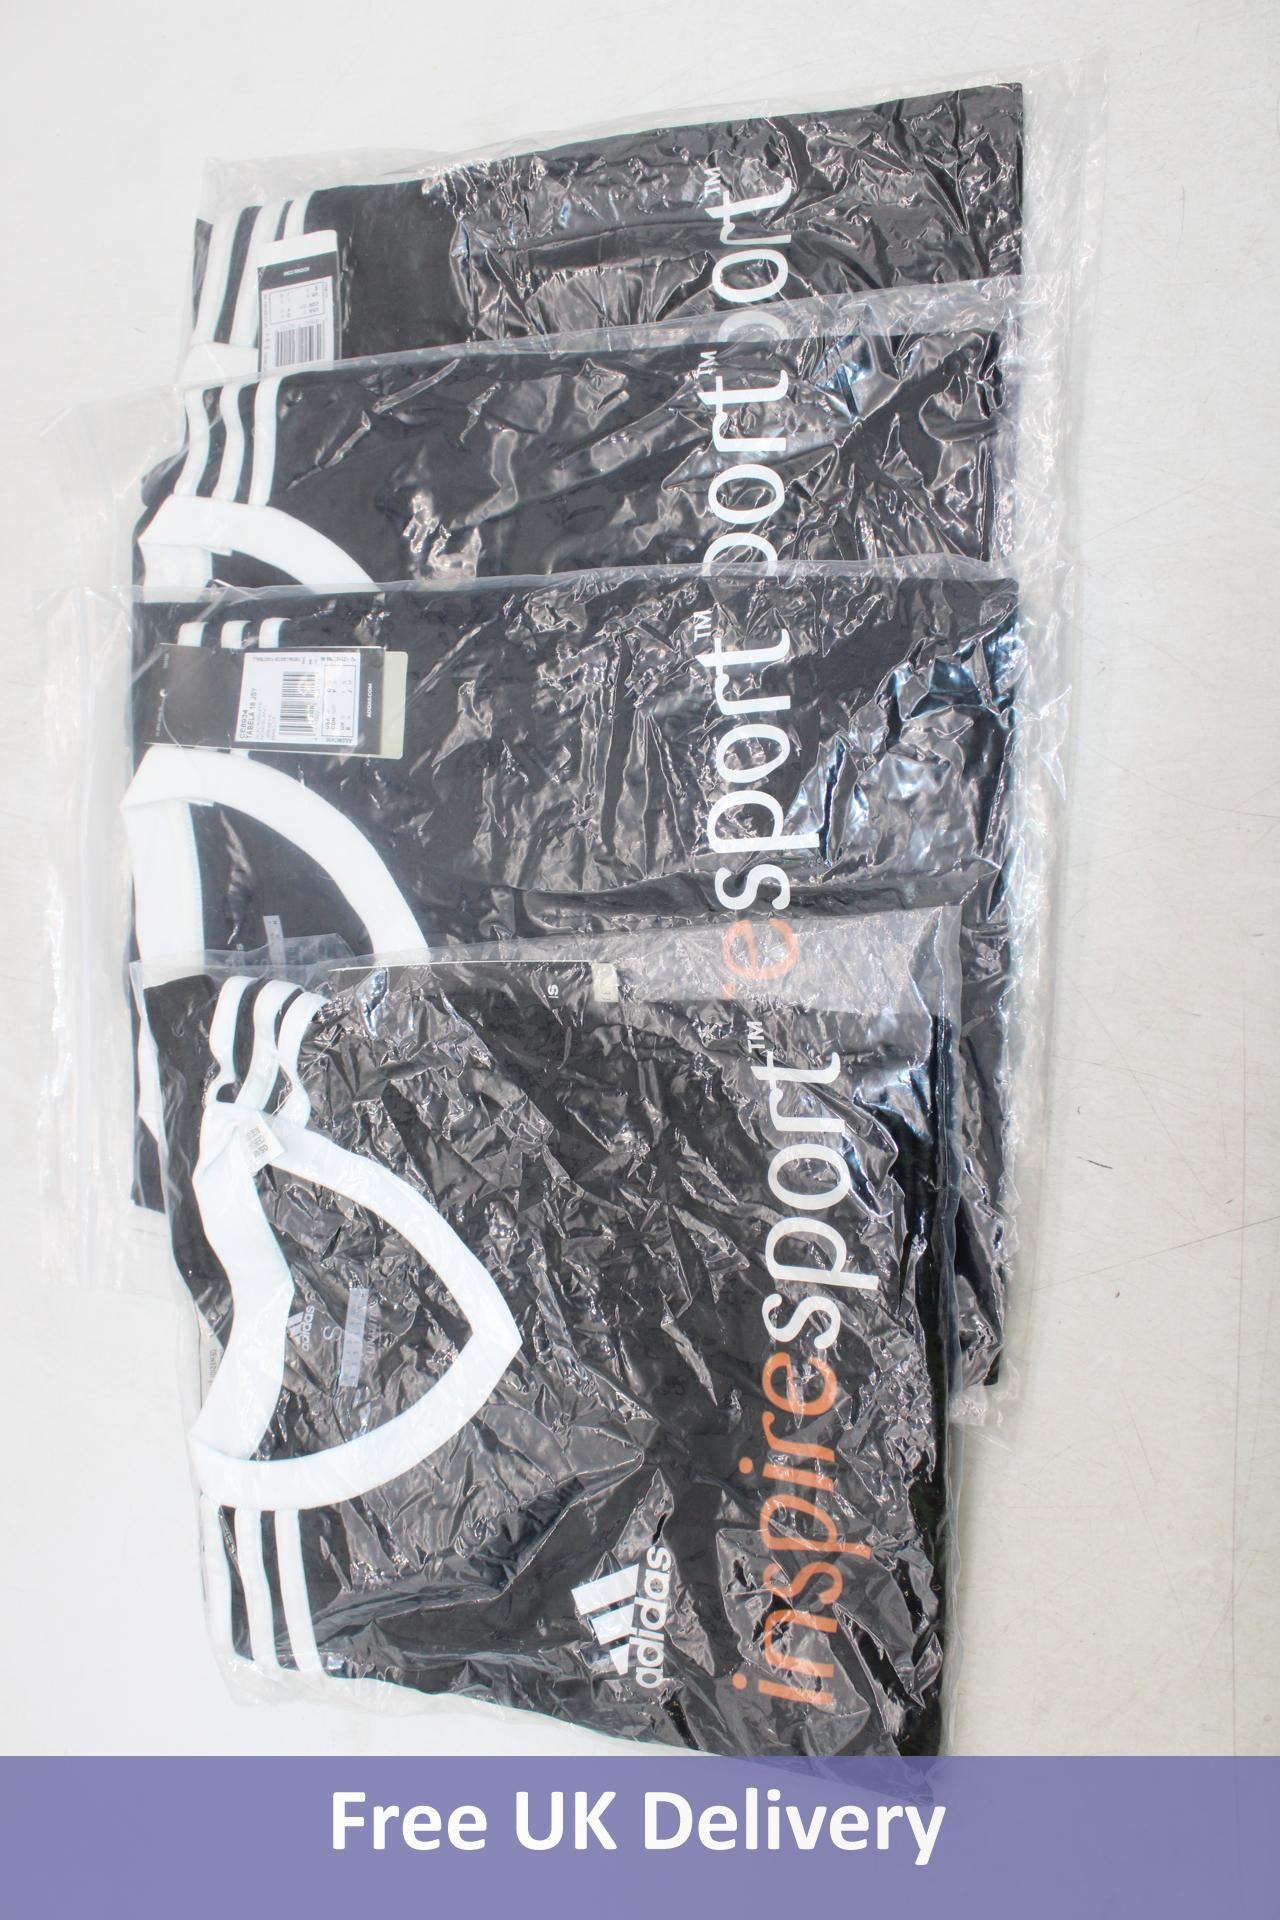 Four Adidas Men's Tabela 18 Jersey with Inspire Sport Logo, Black White, Size S